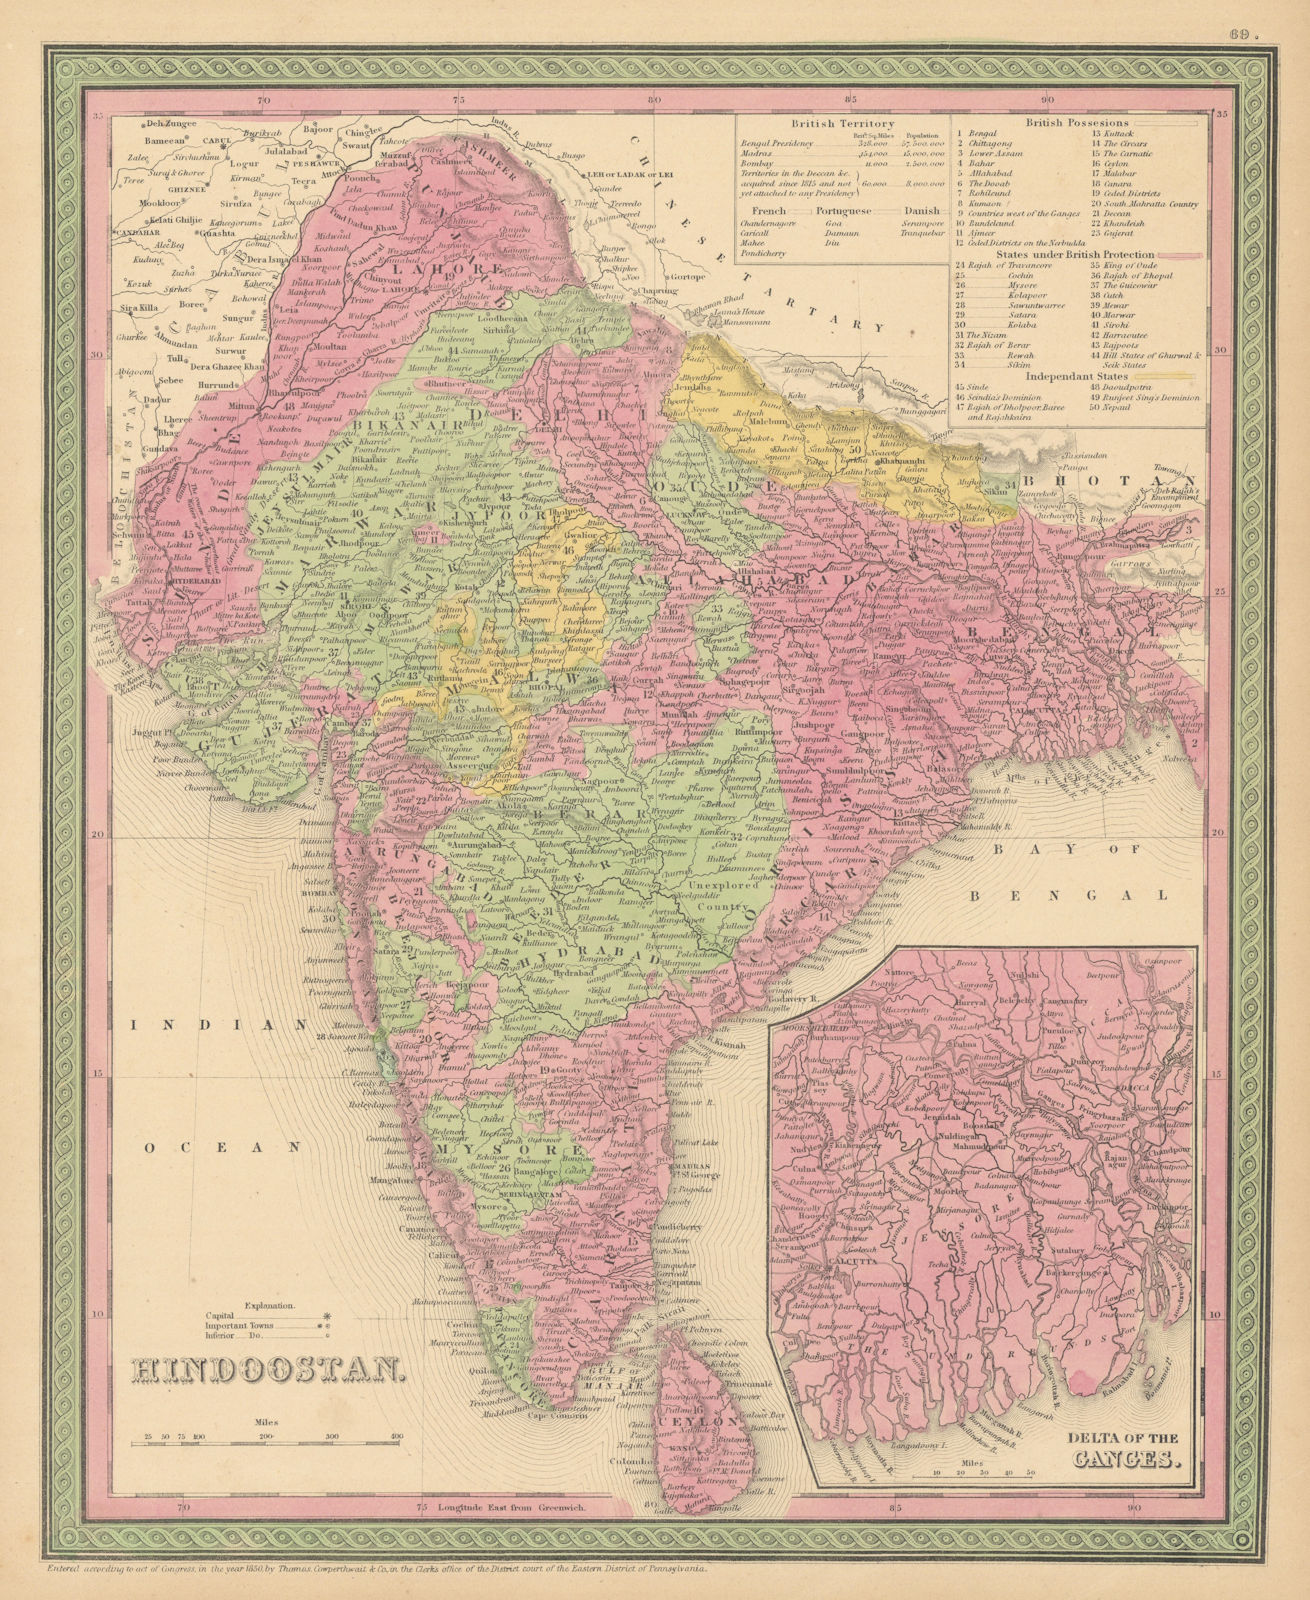 Hindoostan. Ganges Delta. India Bangladesh South Asia. COWPERTHWAIT 1852 map